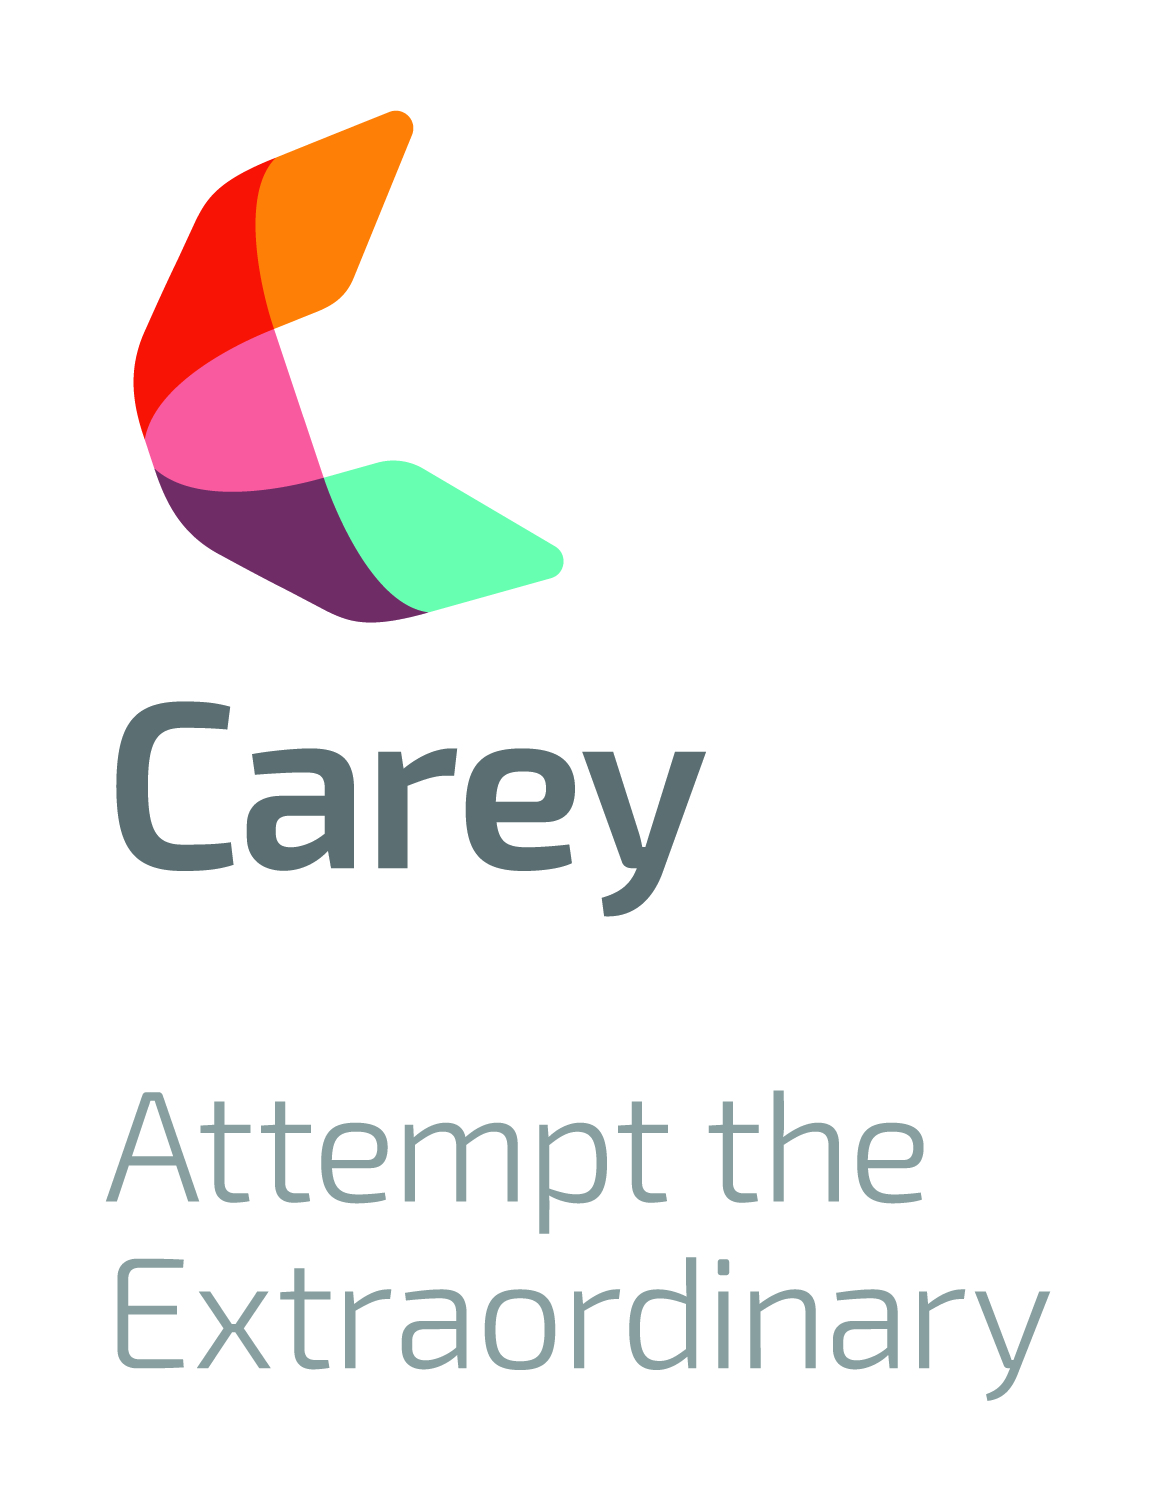 copy-of-carey-logo-master-logo-tagline.jpg